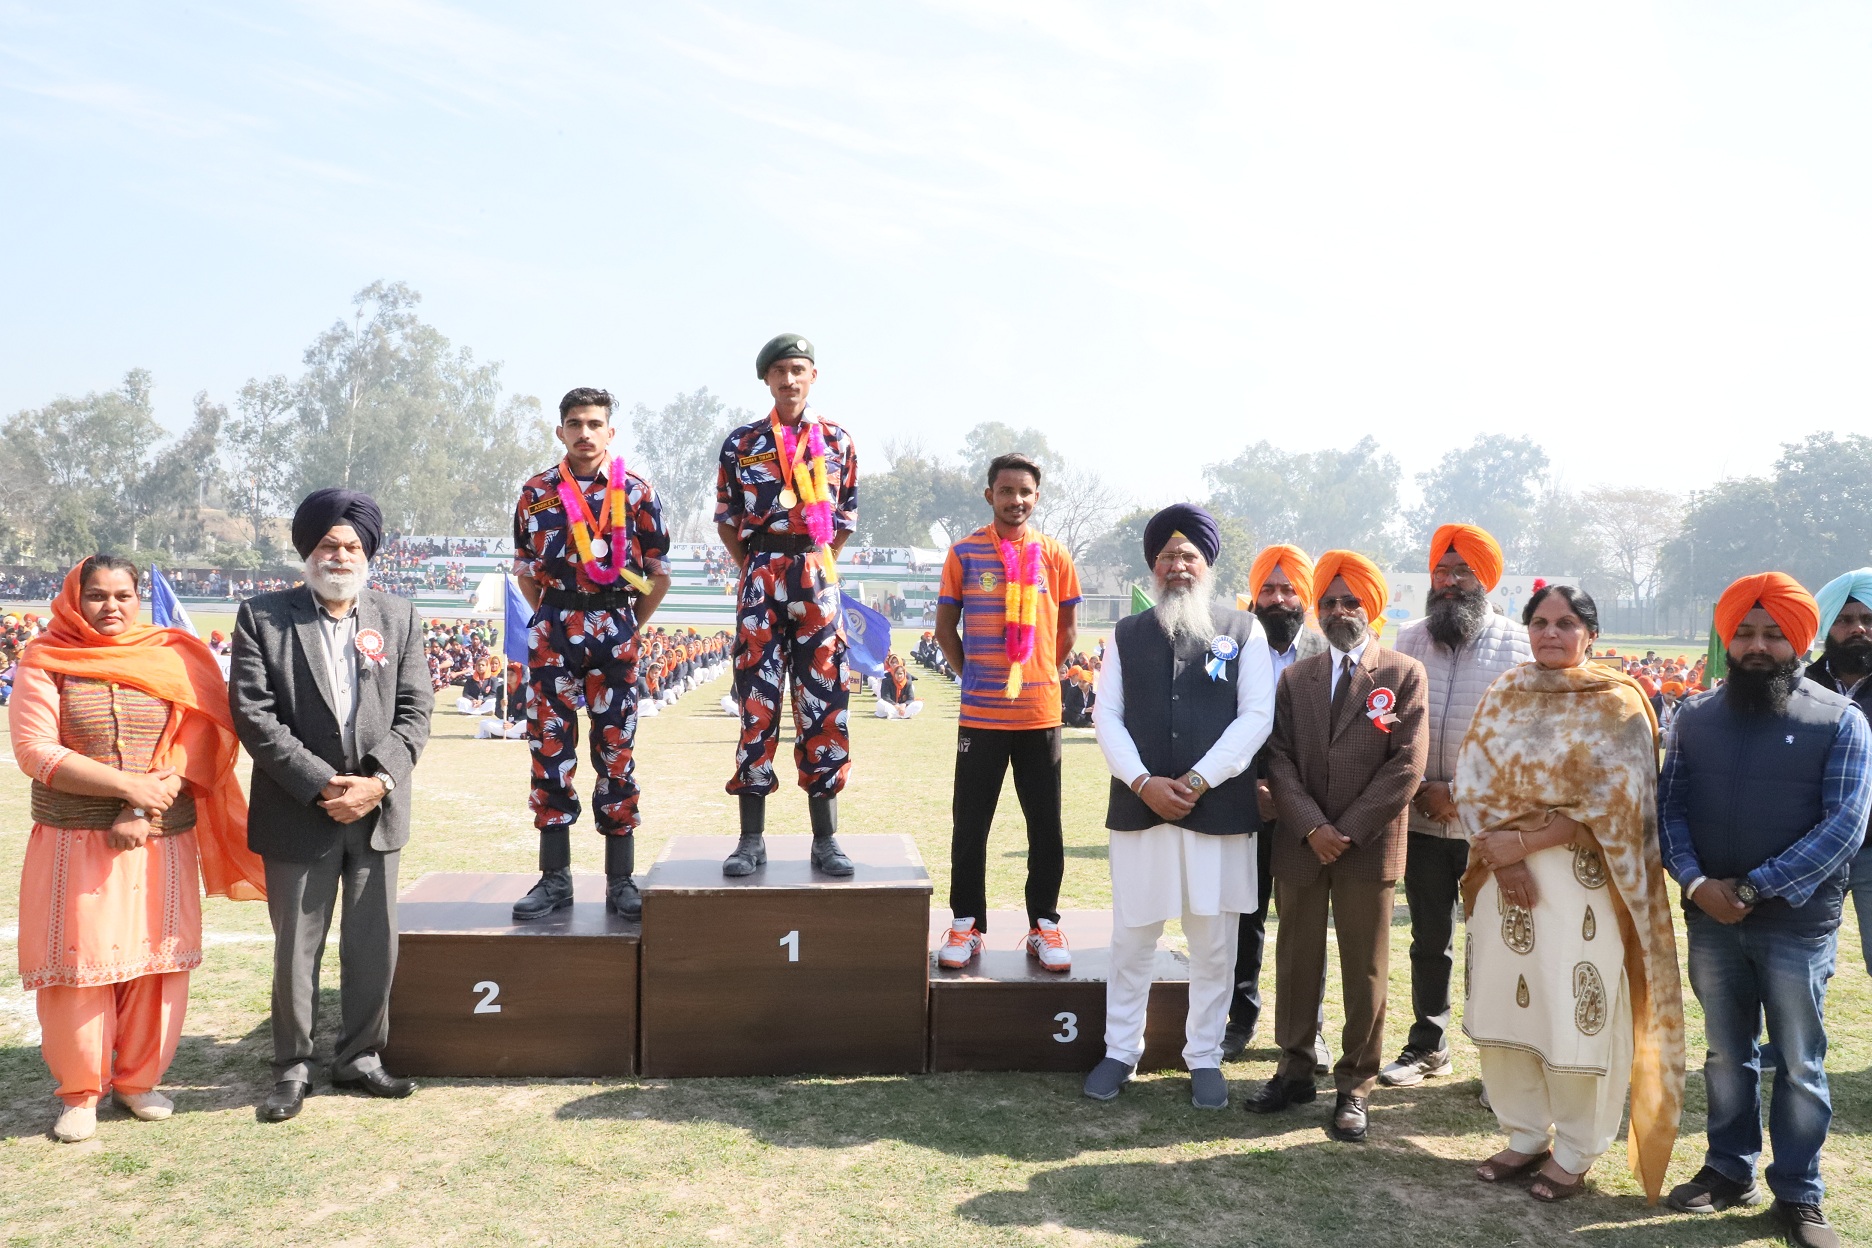 Mata Gujri College organizes 52nd athletic meet; Rishab and Harmanjot chosen best athlete